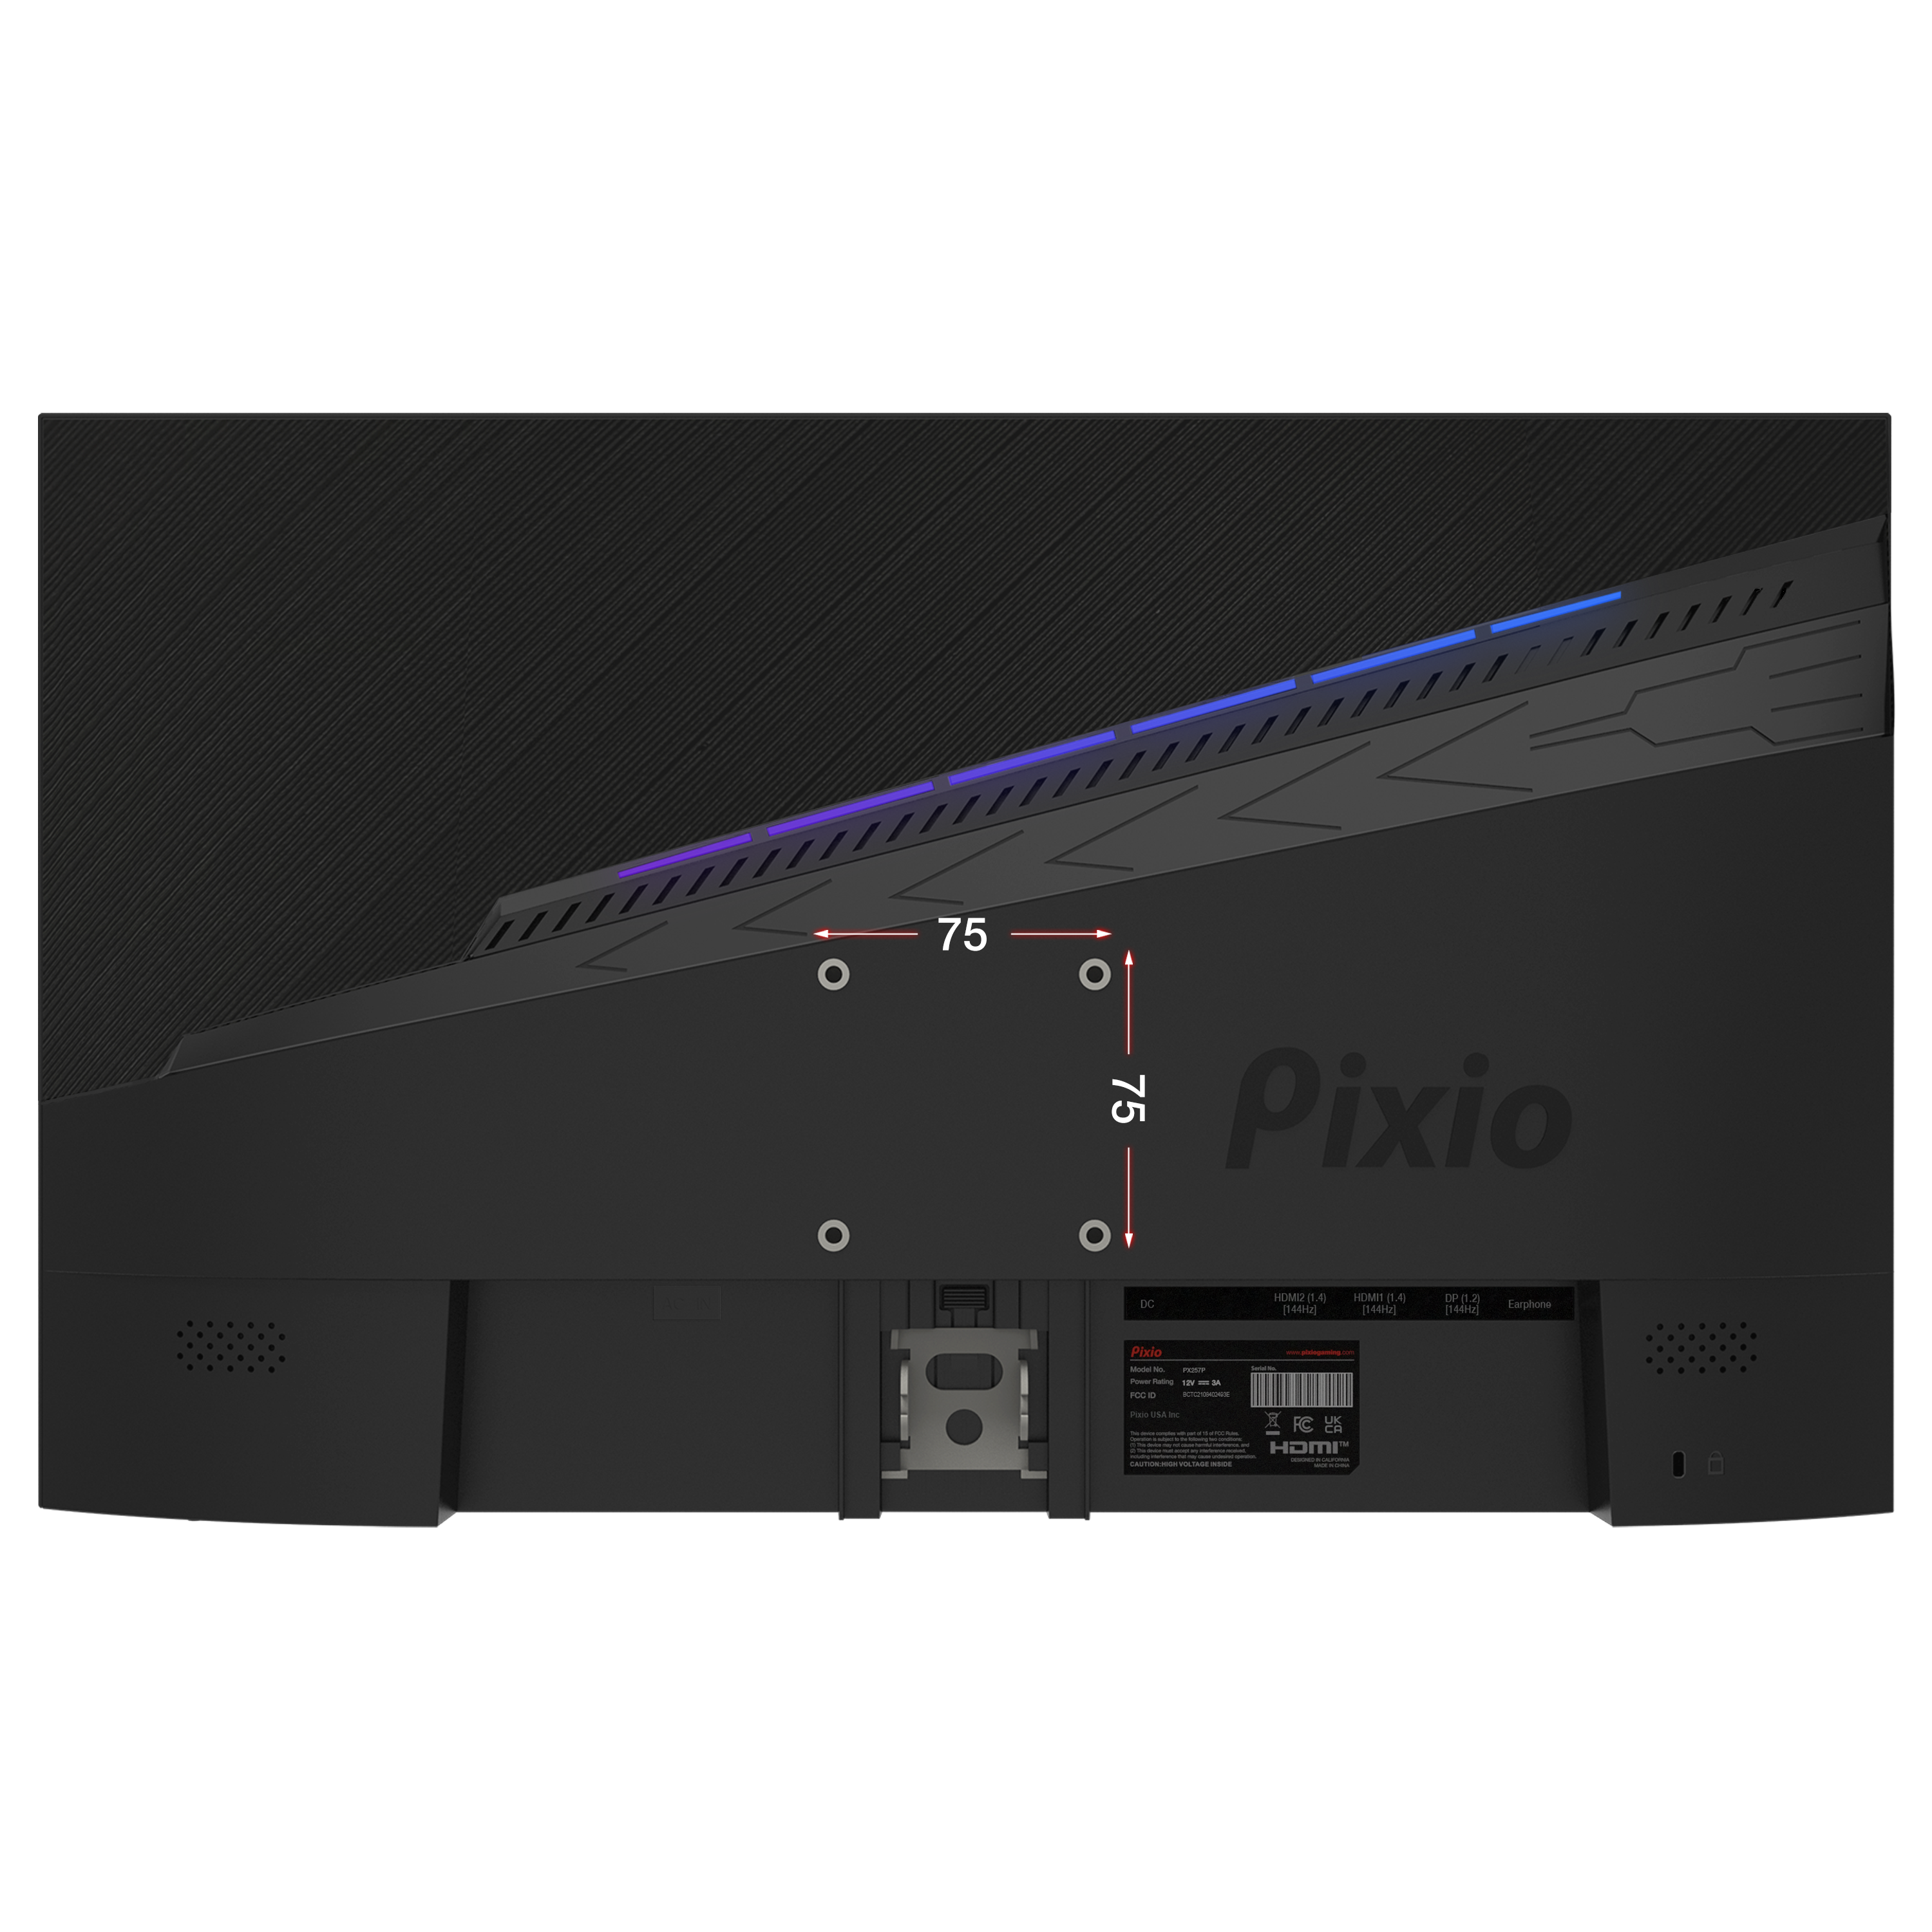 Pixio PX257 Prime | 25 inch 1080p 144Hz 1ms IPS eSports Gaming Monitor